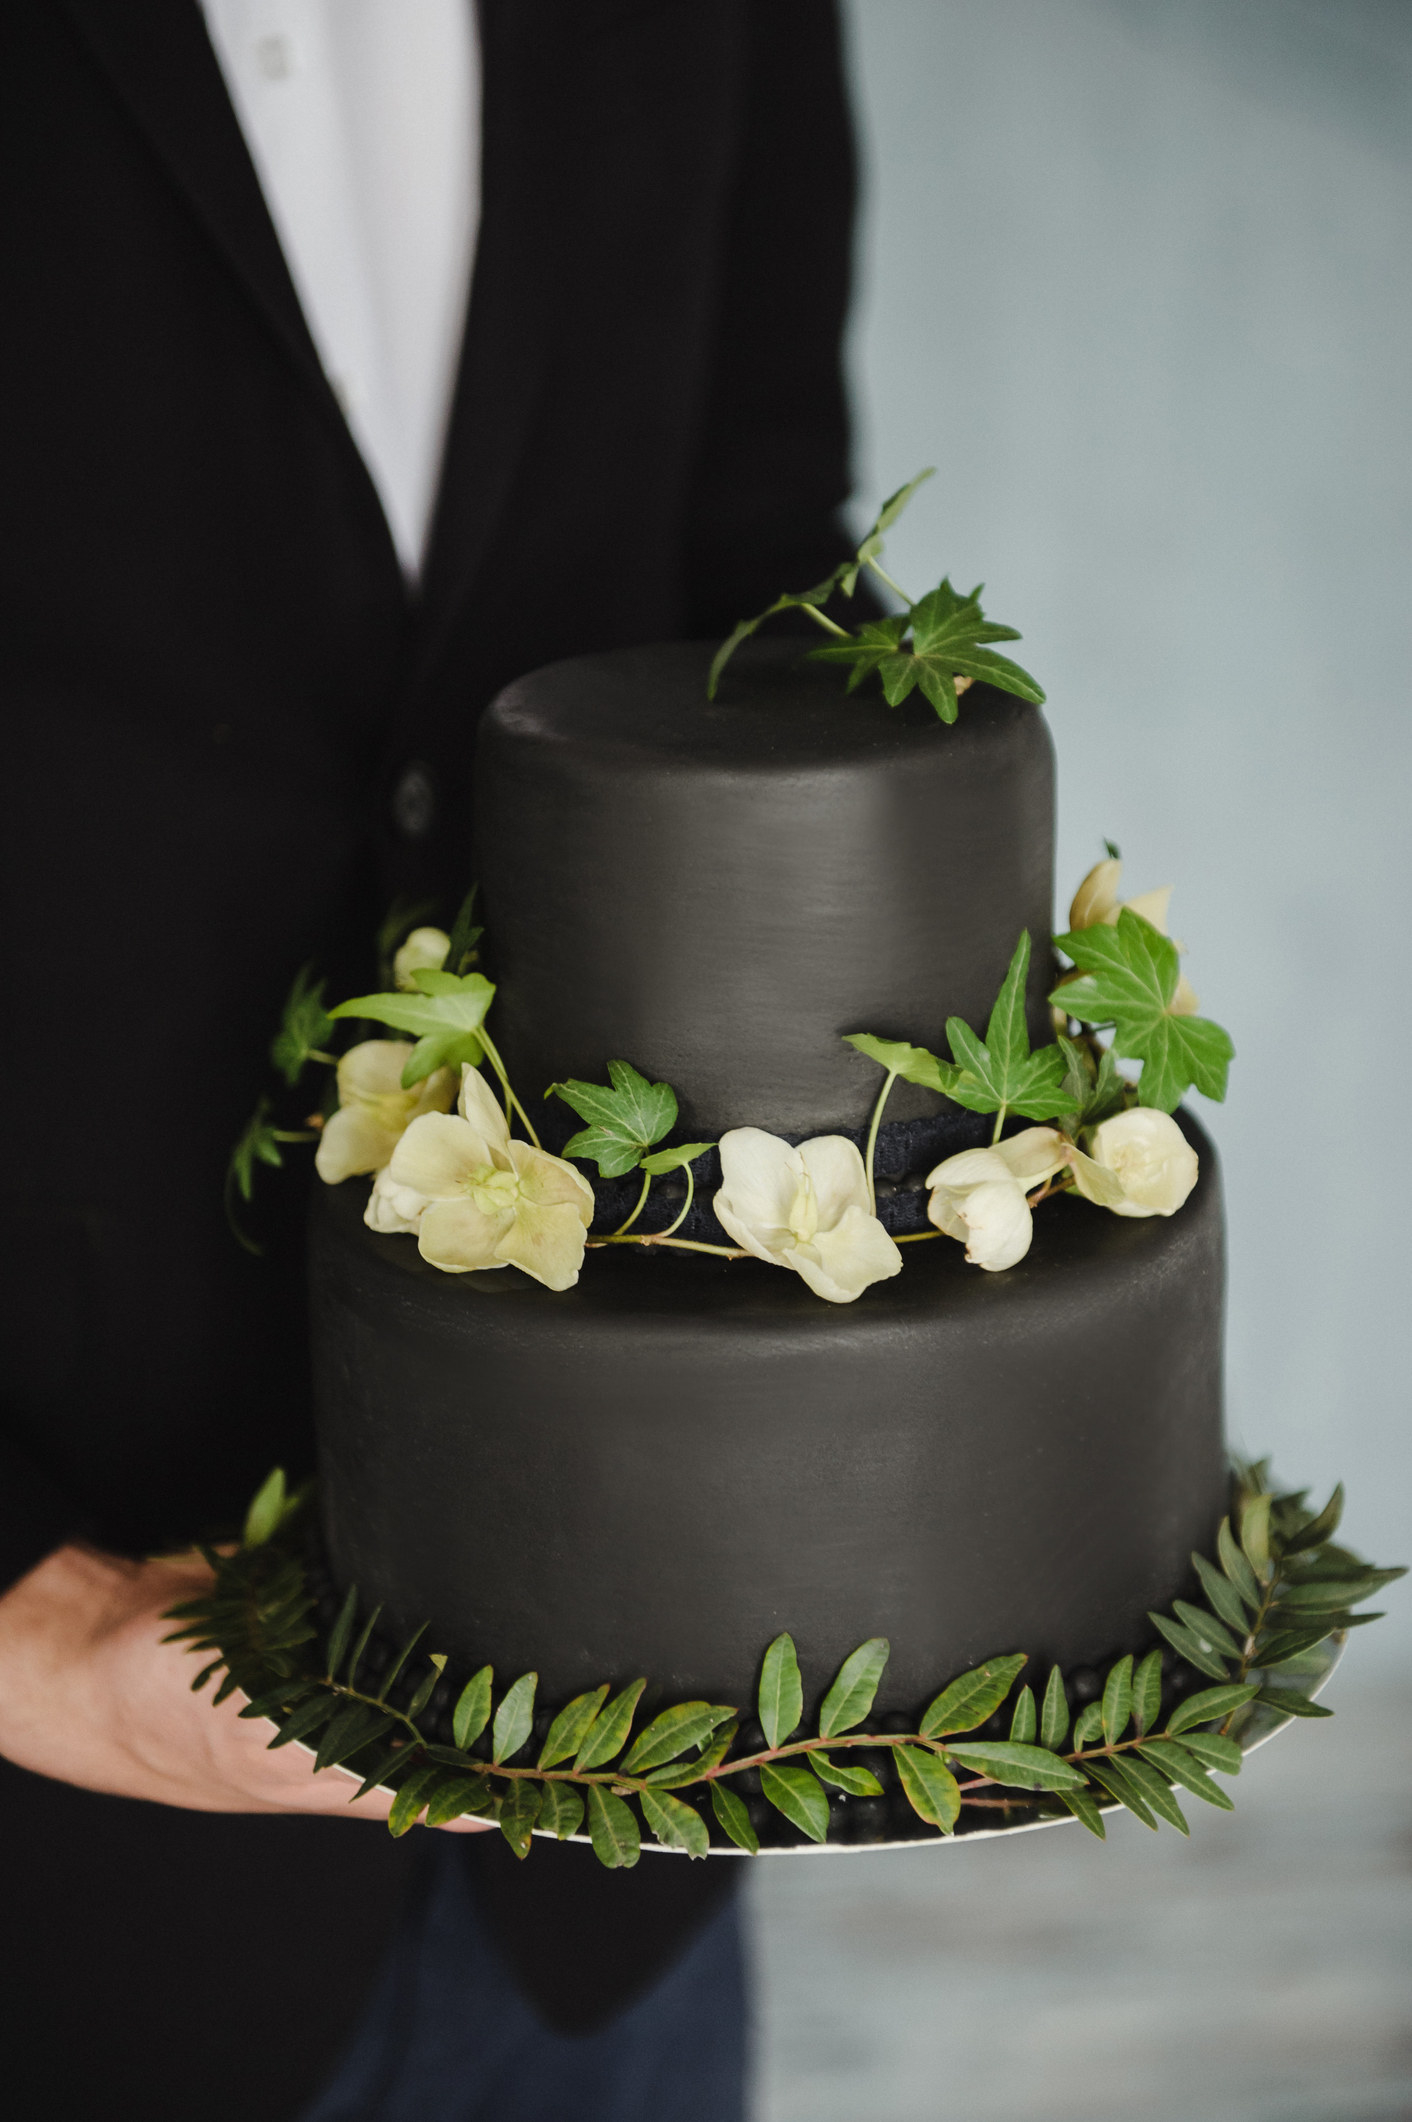 A black wedding cake